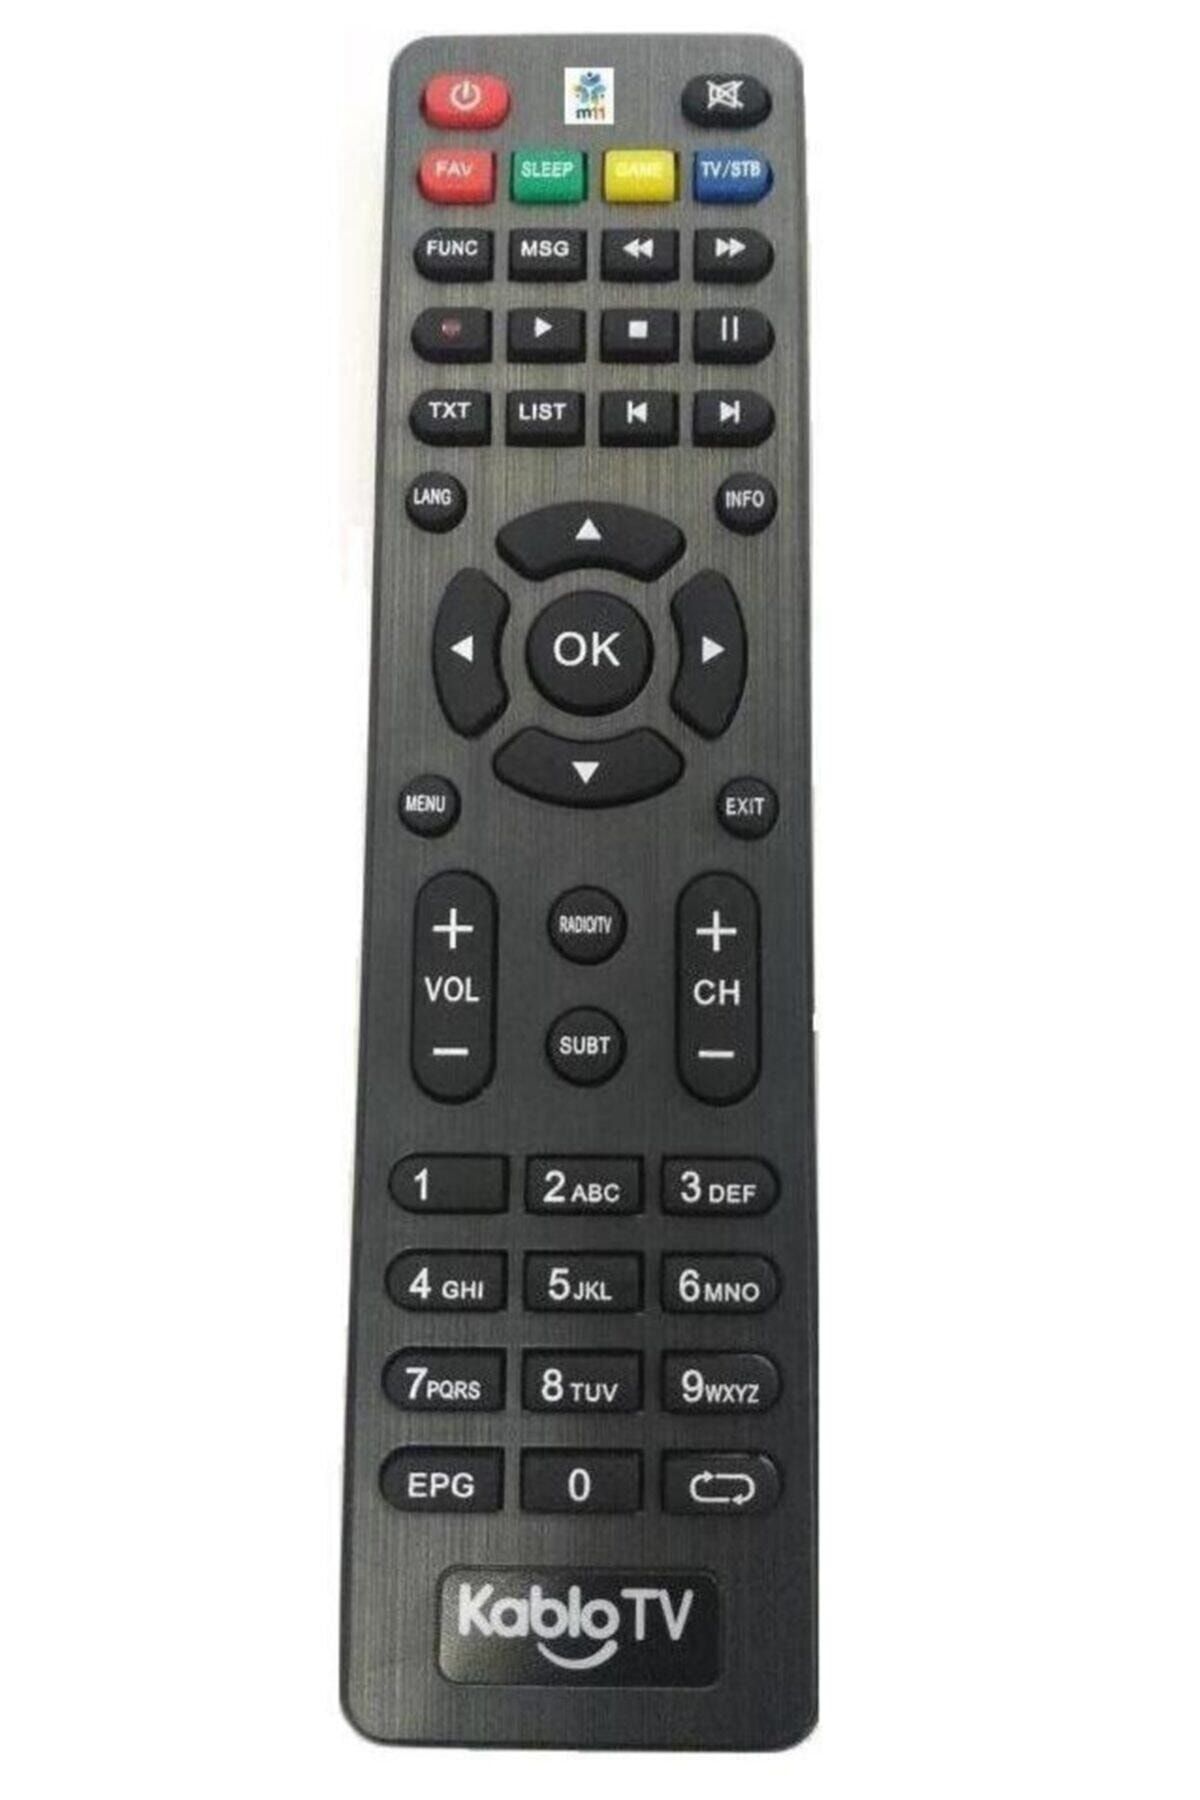 Neta Kablo Tv Teledünya Hd 8800 Ve 8900 Serisi Kumanda